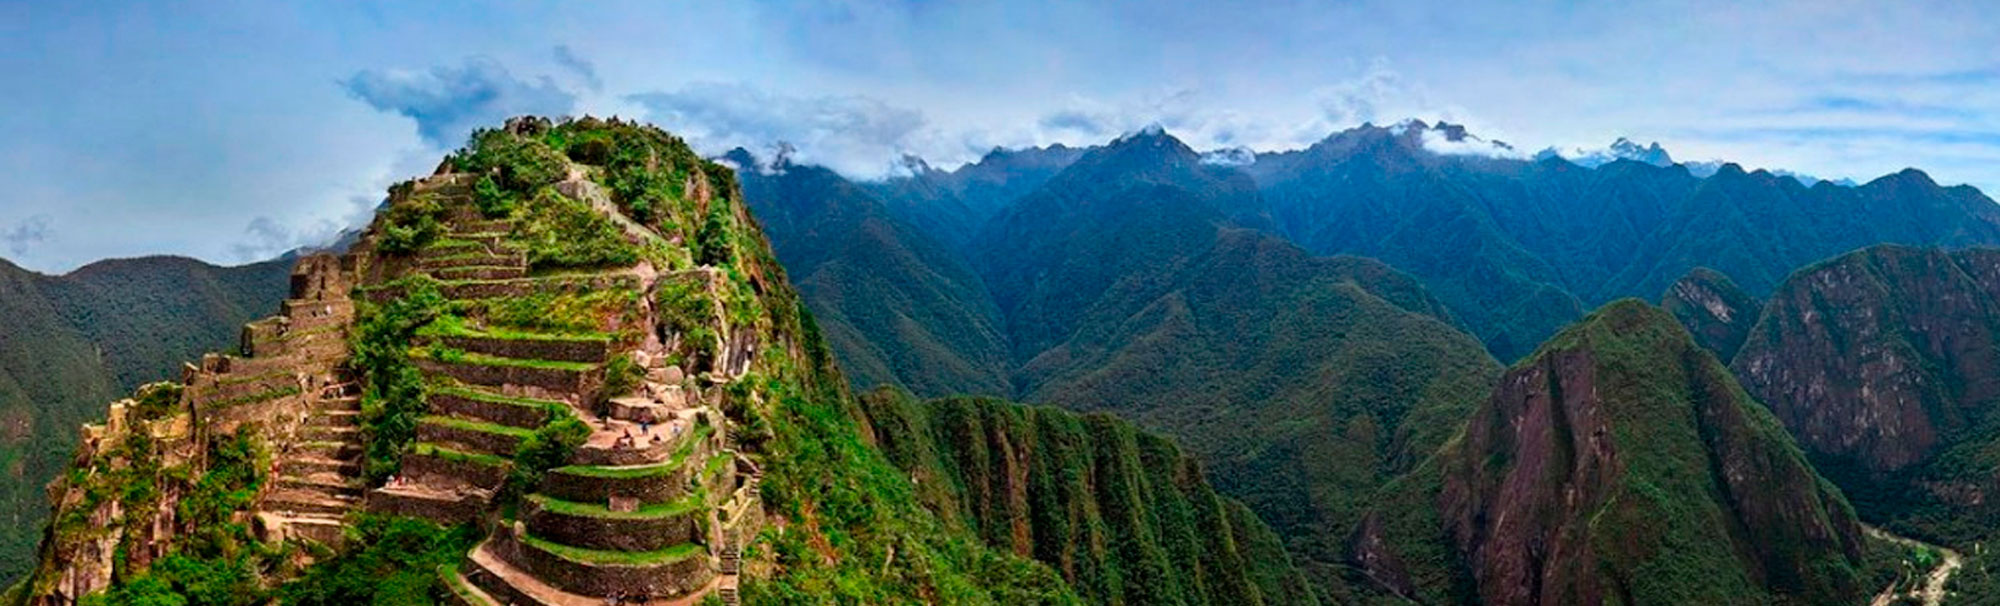 Huayna Picchu Montanha